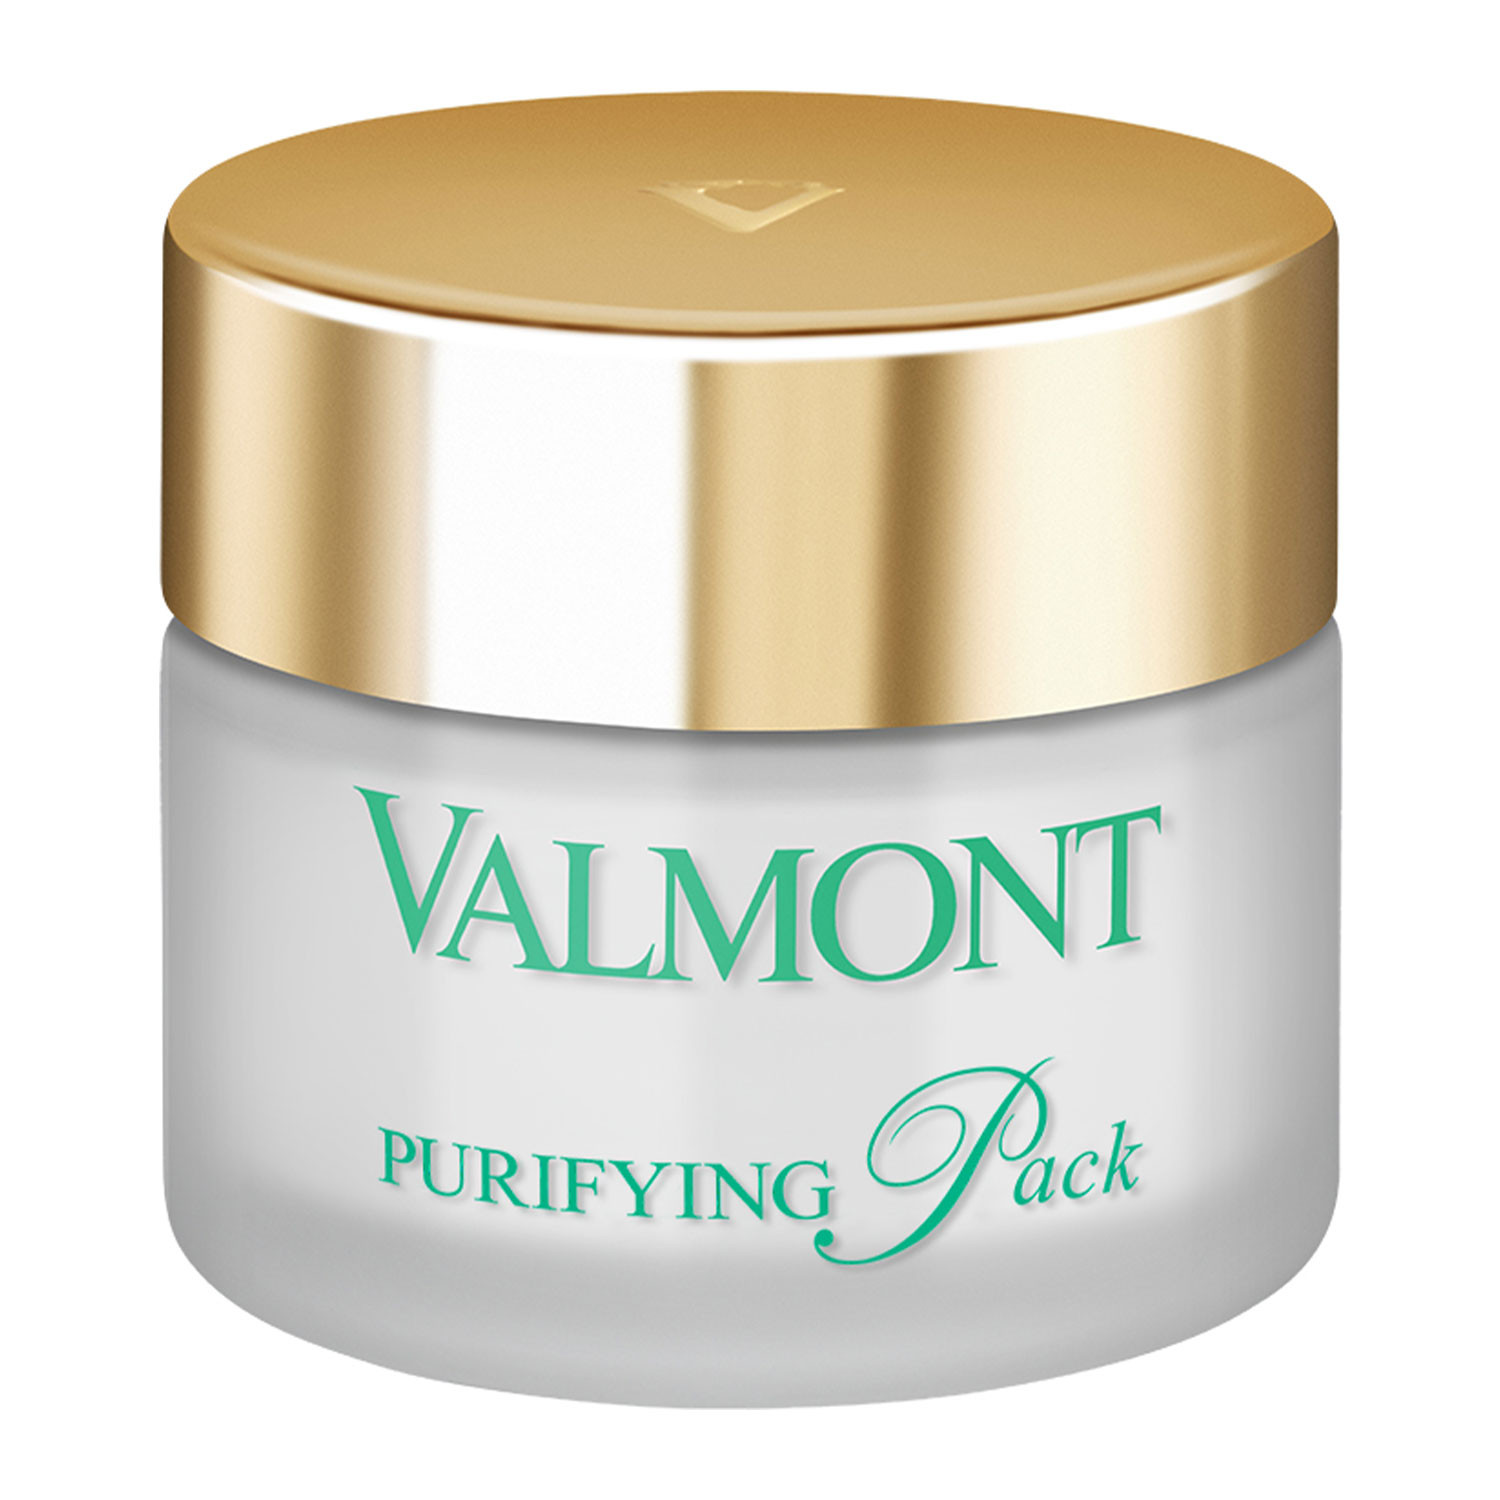 Valmont Purifying Pack Очищающая маска